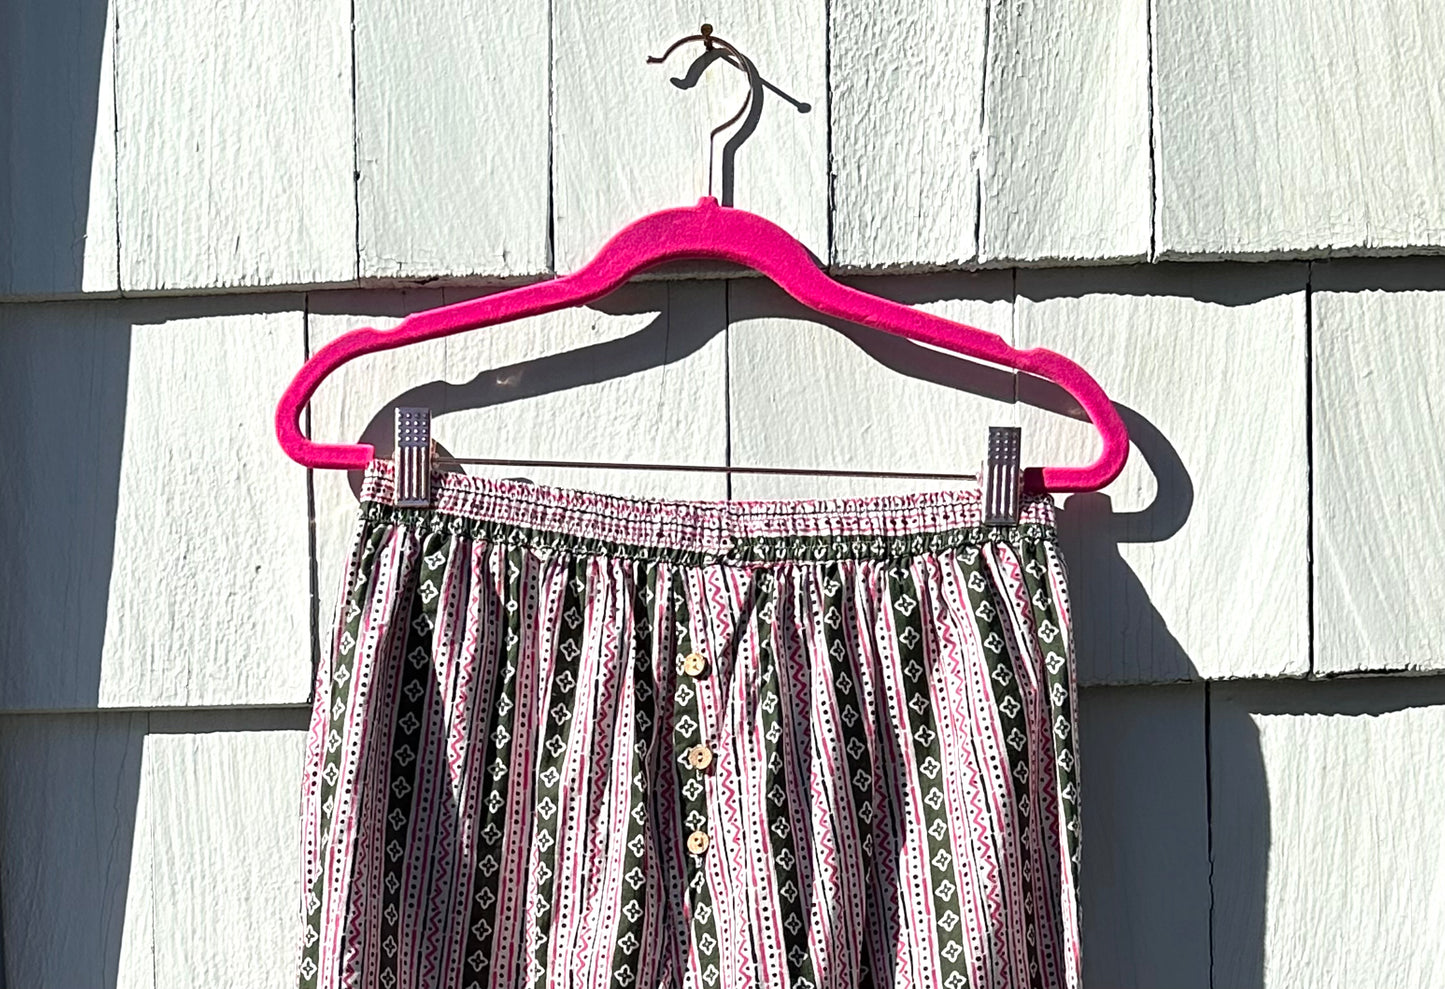 Mens Cotton Hand-block Print Pajamas in Pink, black and White Pattern - DharBazaar